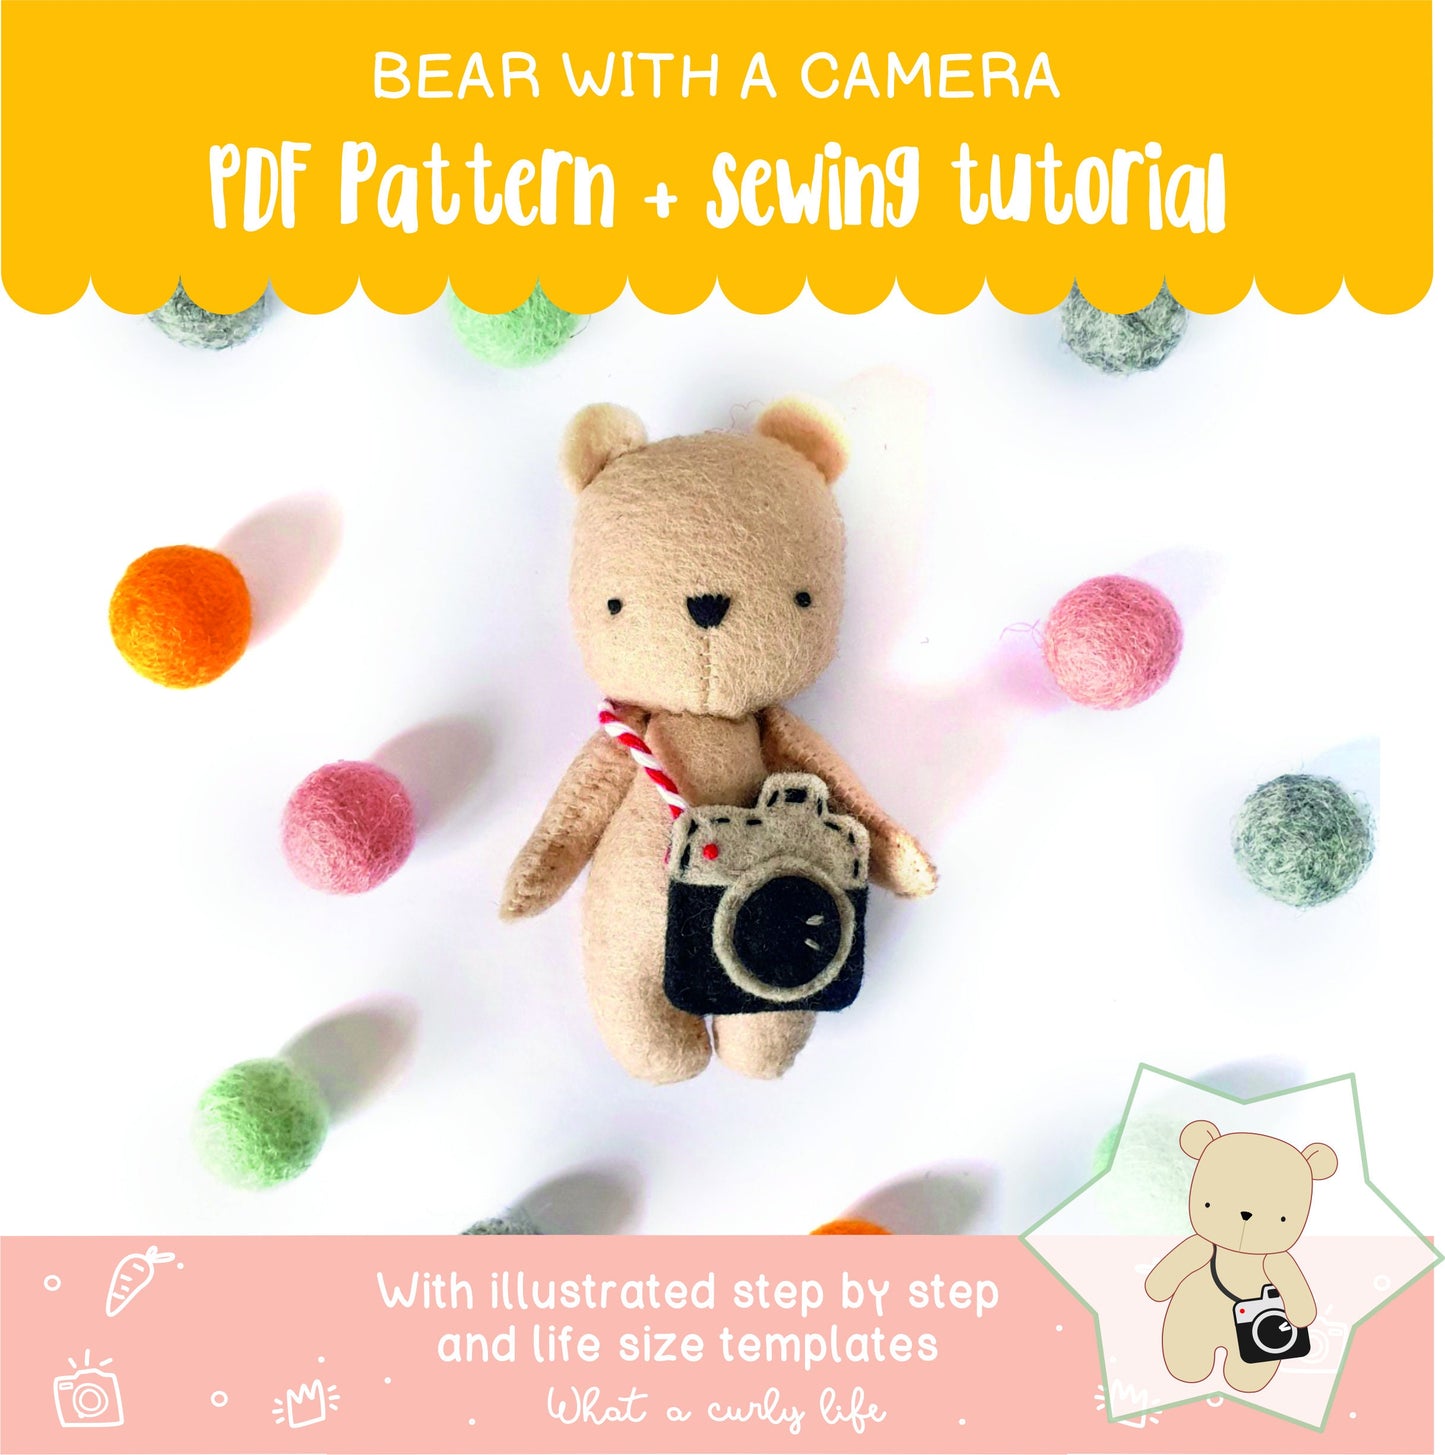 Bear with a camera PDF pattern + tutorial